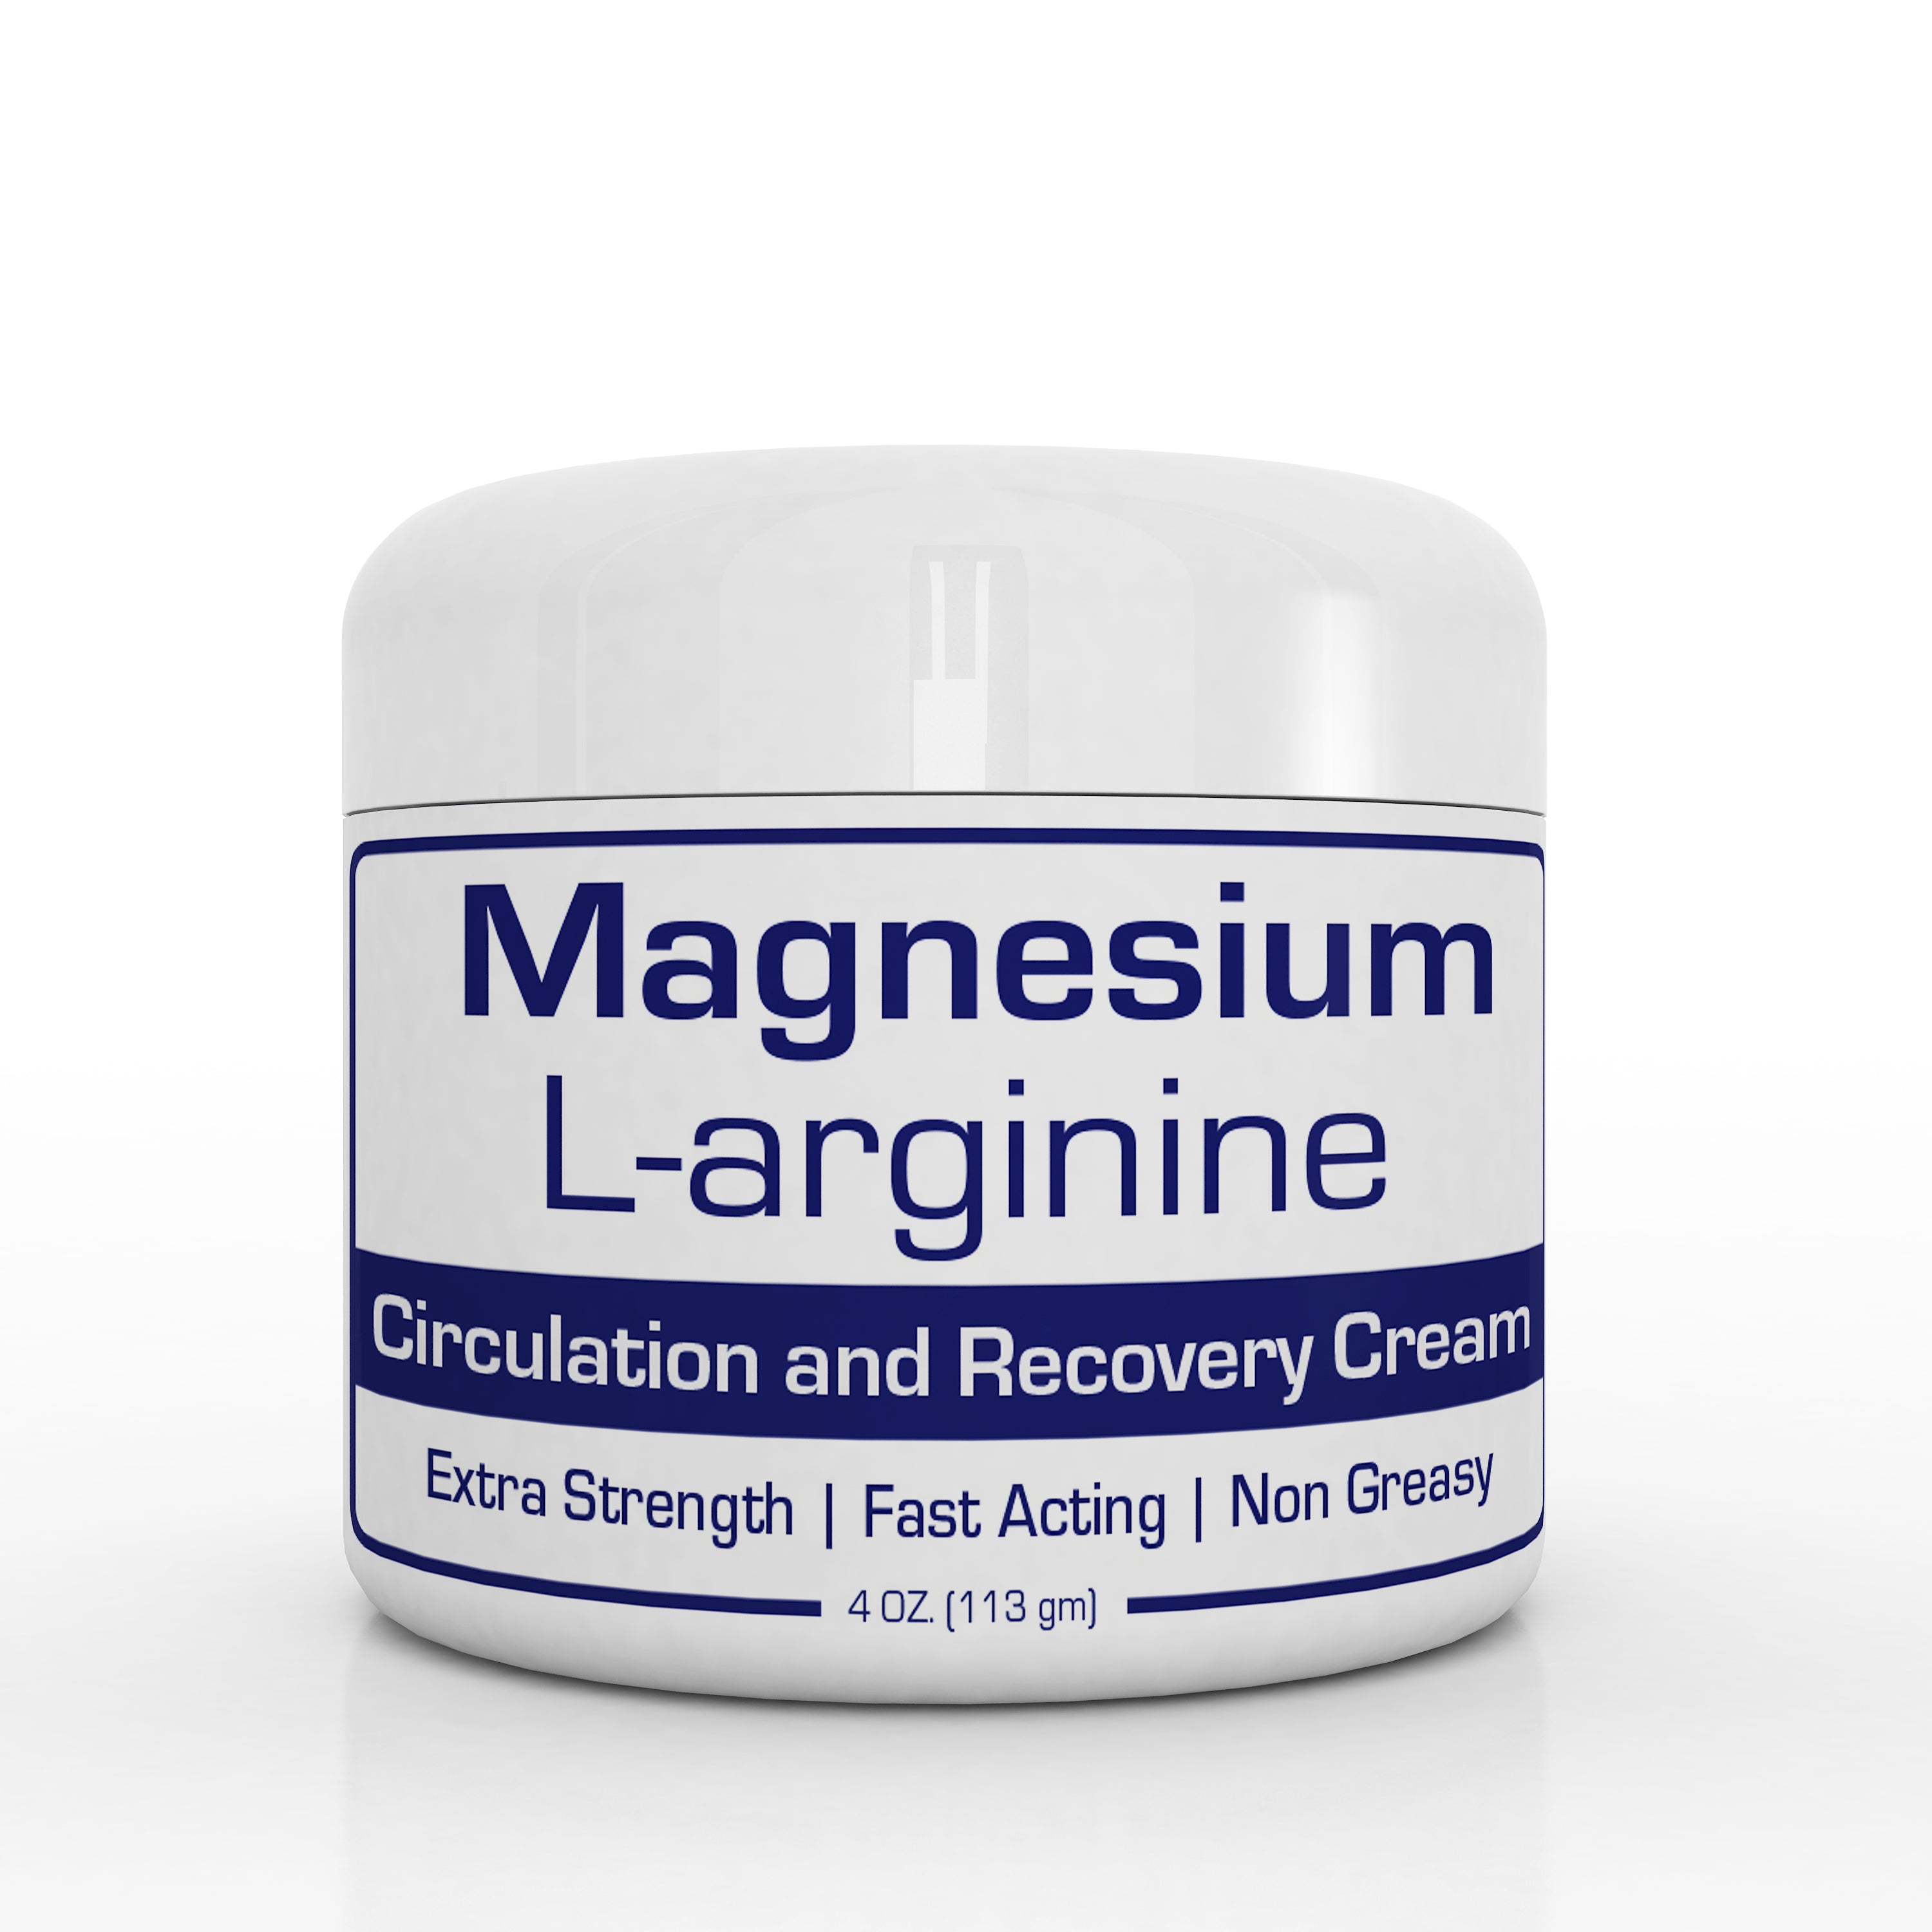 Liposomal Magnesium L-arginine Cream by Nutrasal